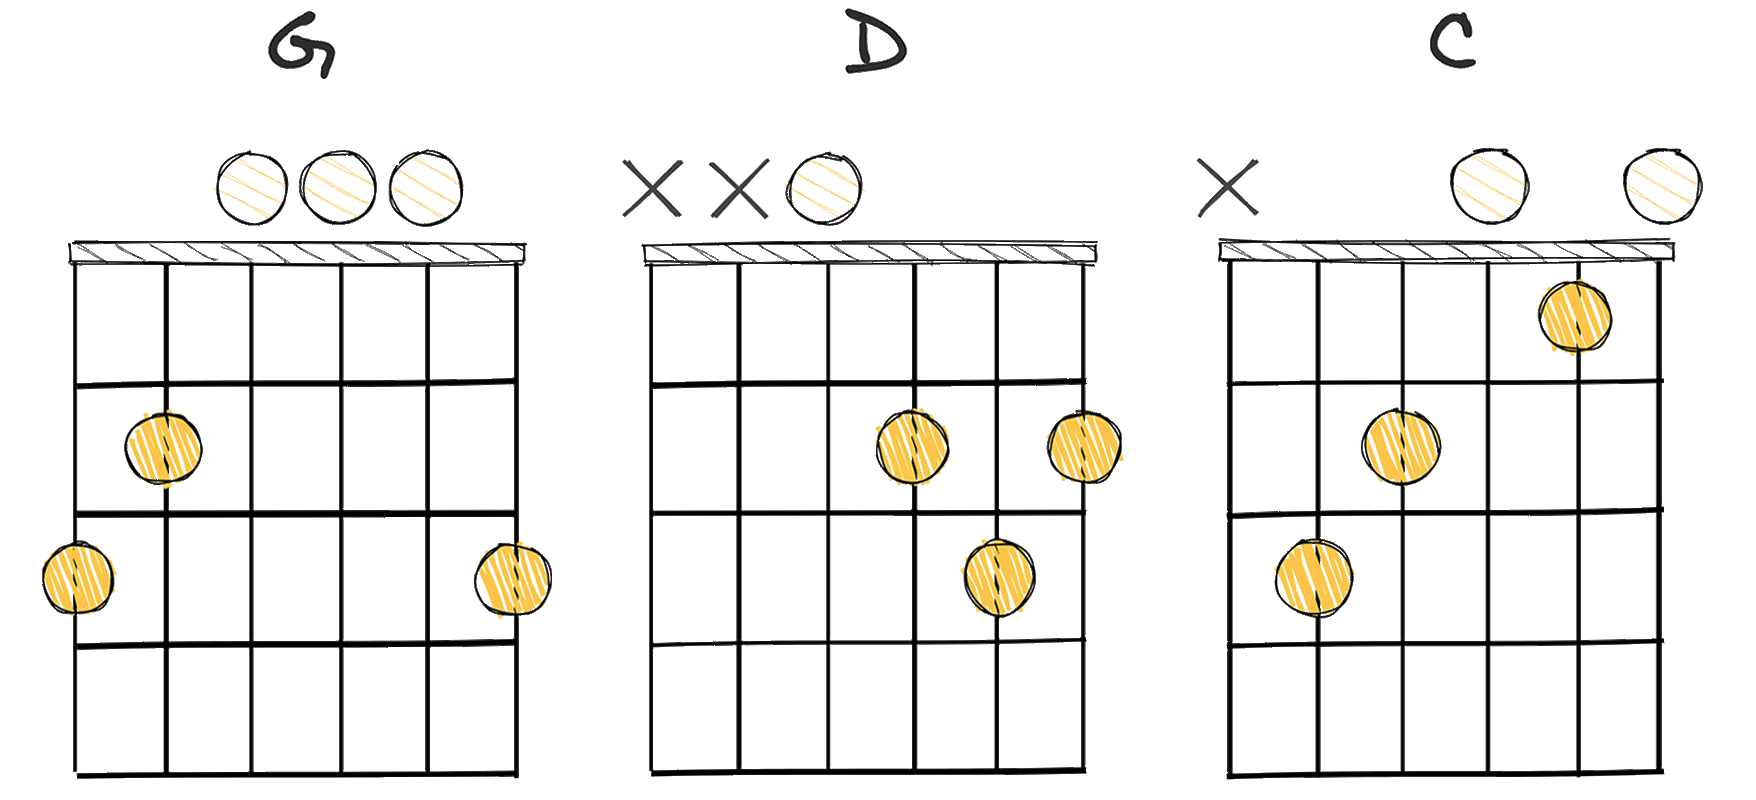 I-V-IV (1-5-4) chords diagram